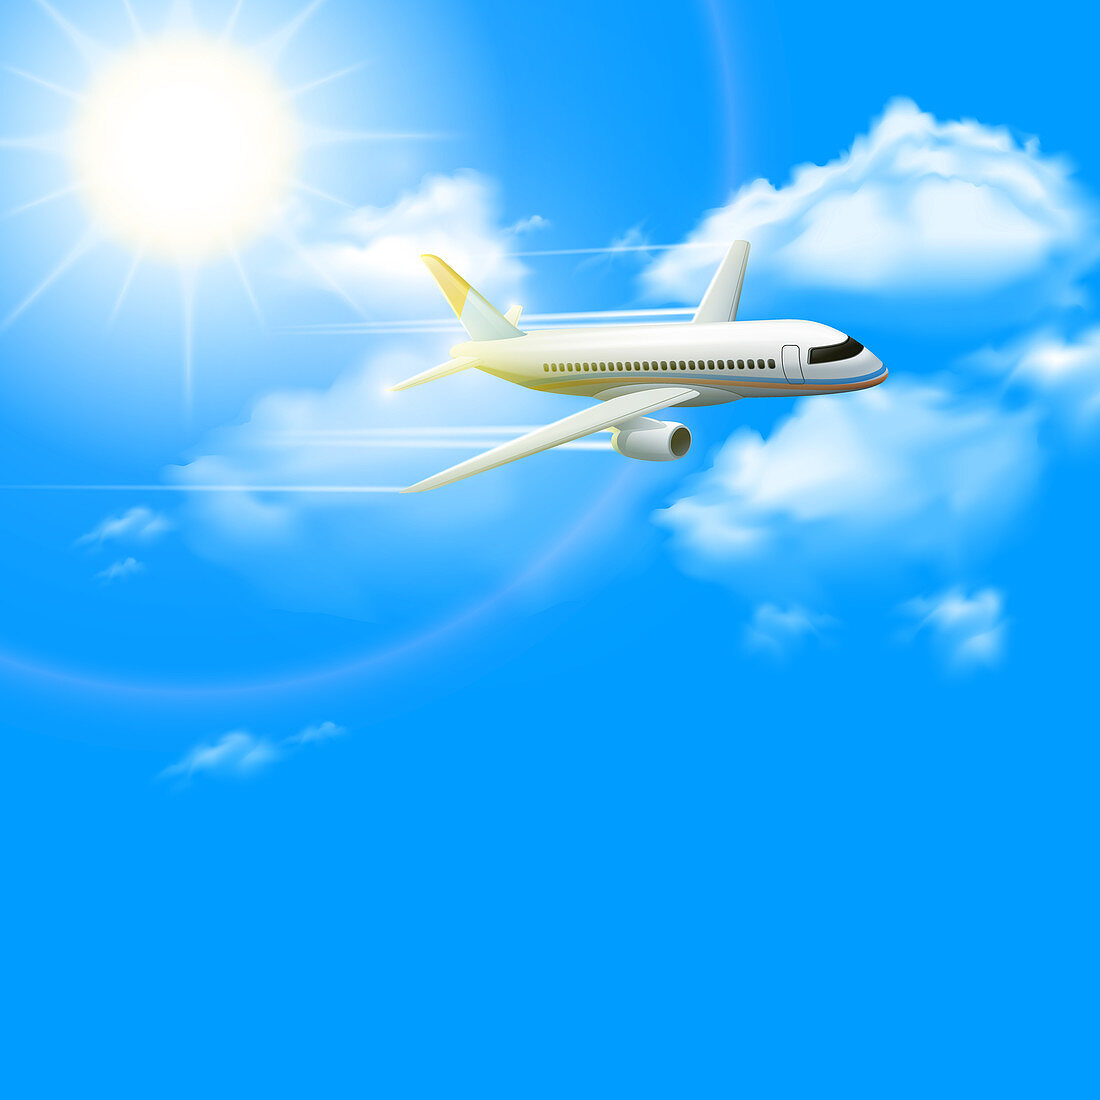 Aeroplane in flight, illustration